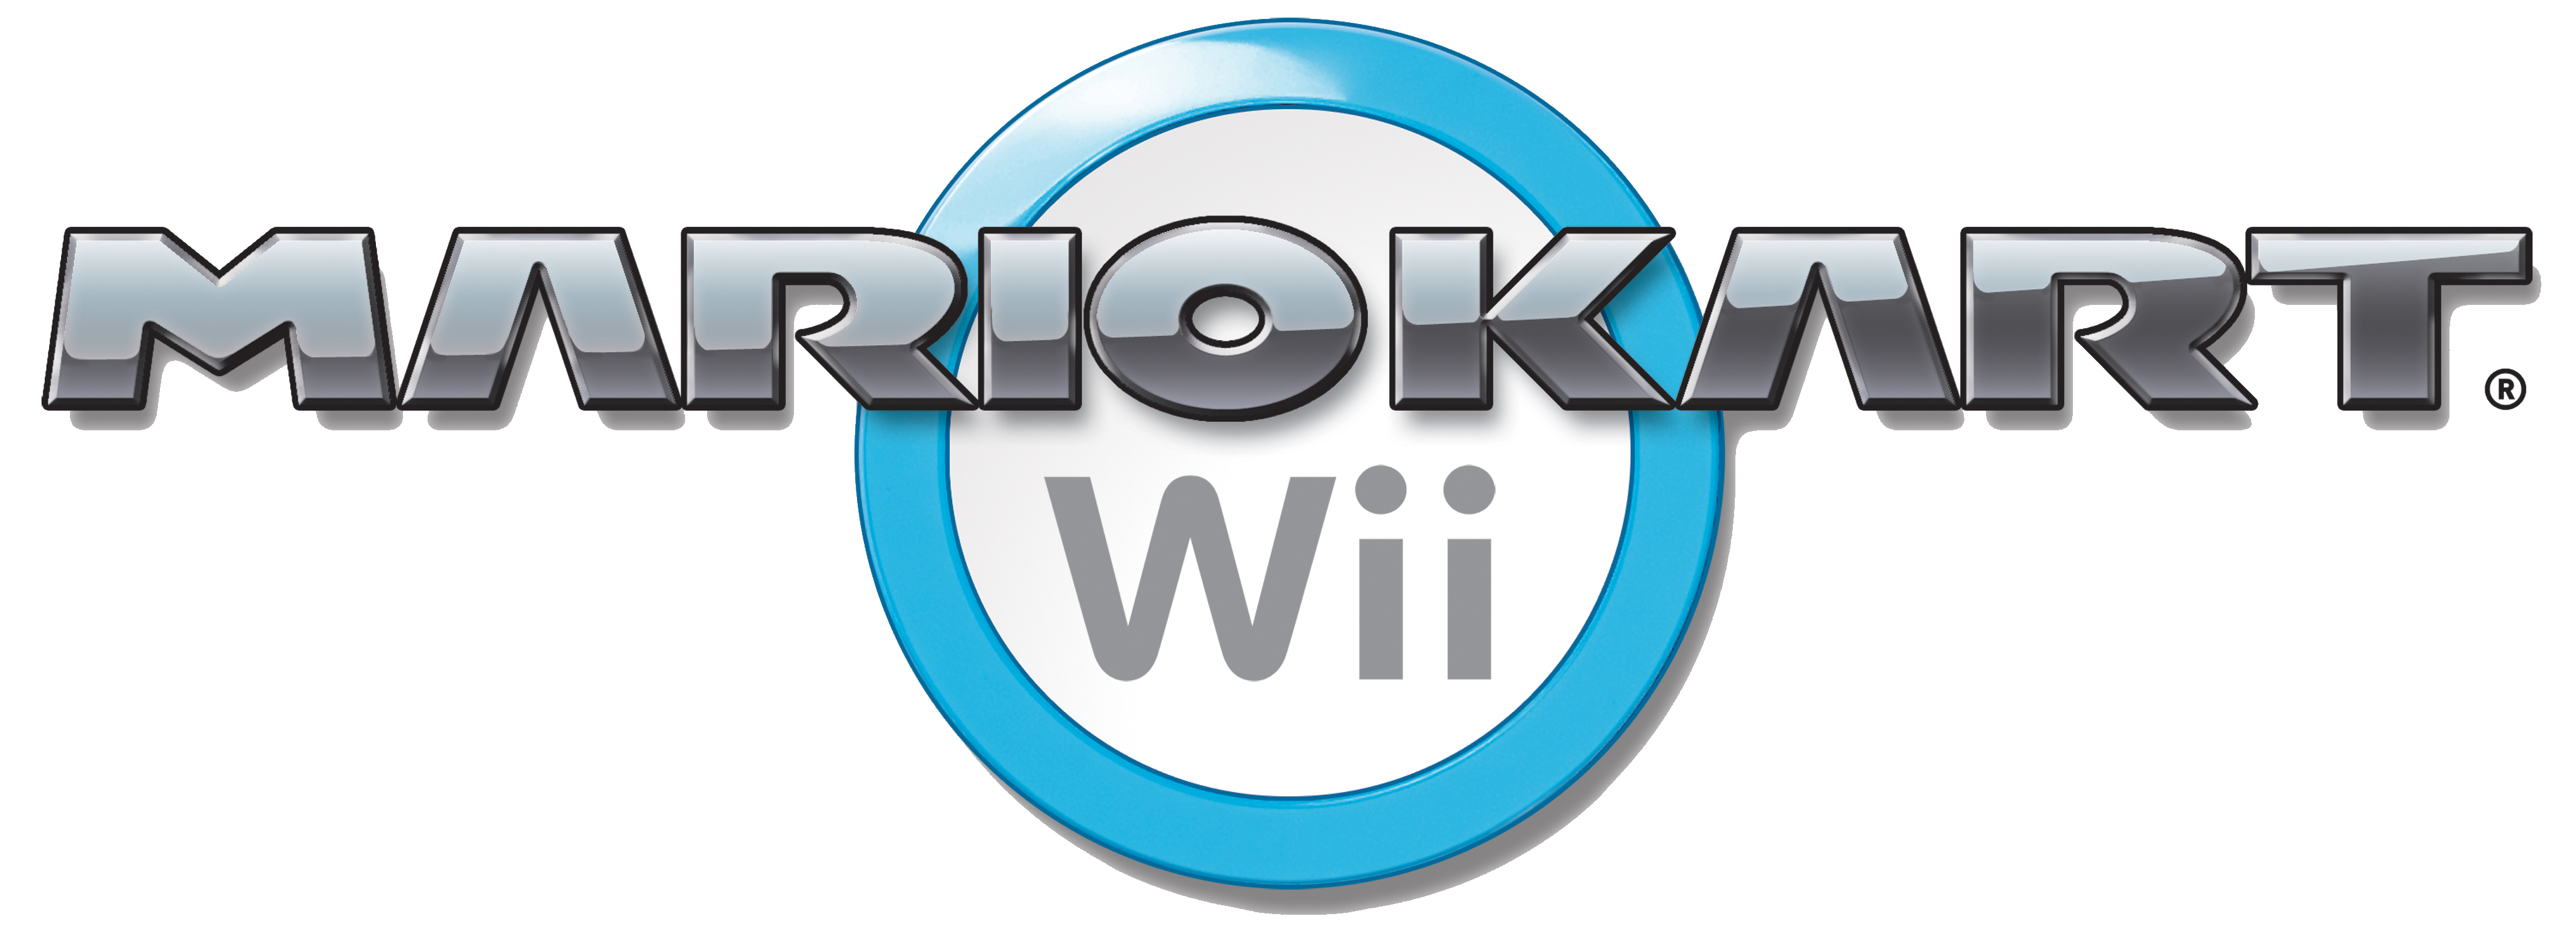 Image result for mario kart wii logo